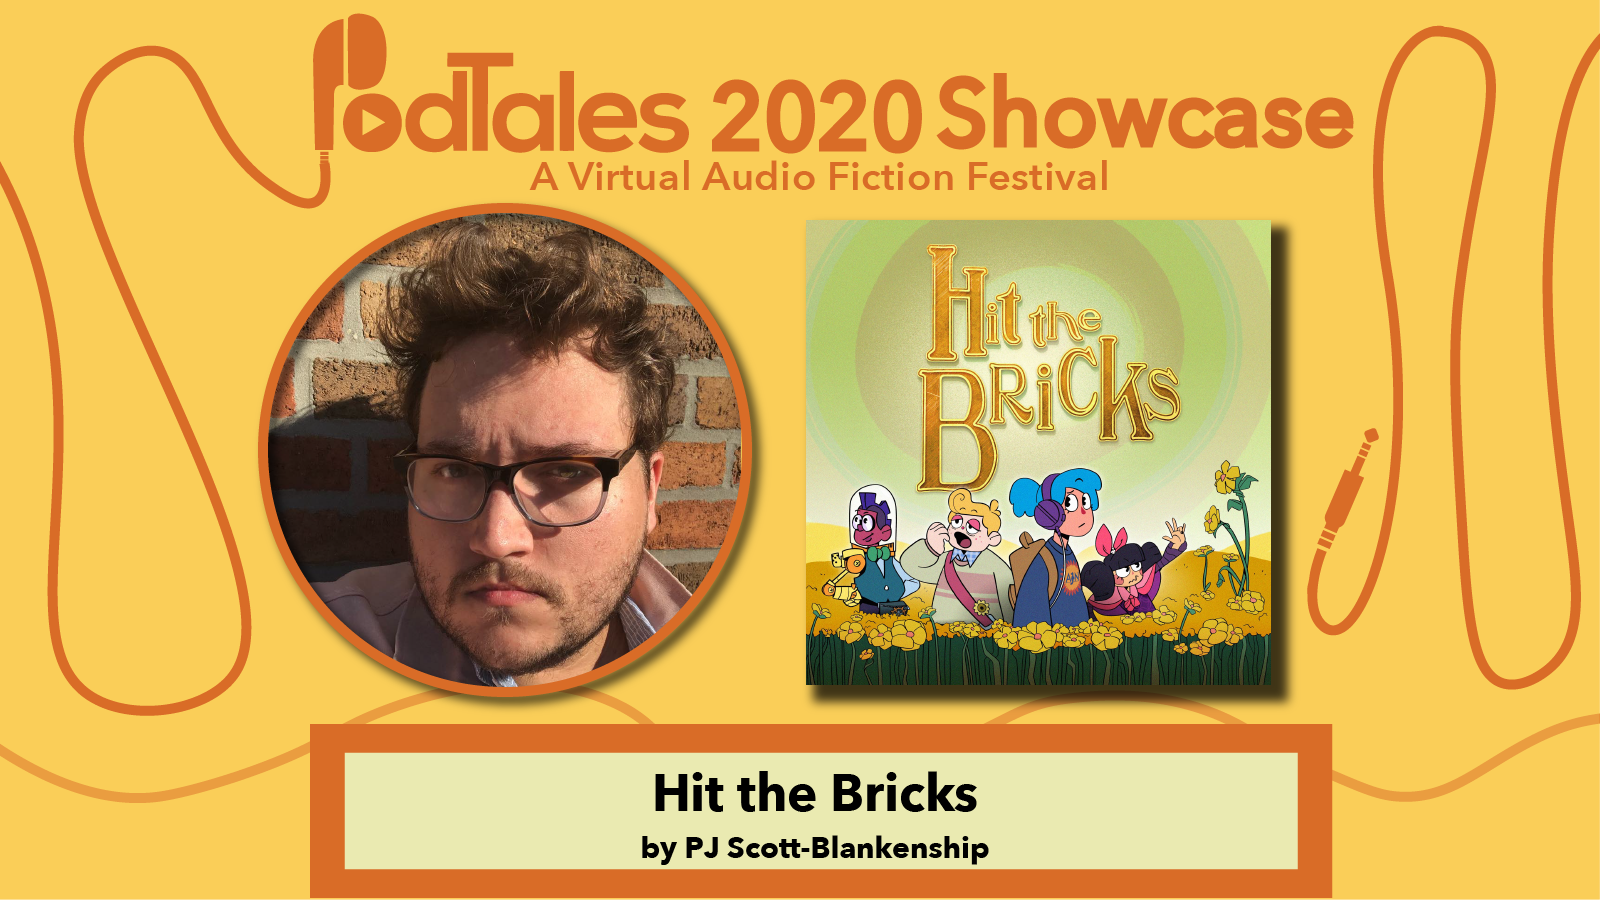 Text reading “PodTales 2020 Showcase: A Virtual Audio Fiction Festival”, Photo of Pj Scott-Blankenship, Show Art for Hit the Bricks, Text reading “Hit the Bricks by PJ Scott- Blankenship”